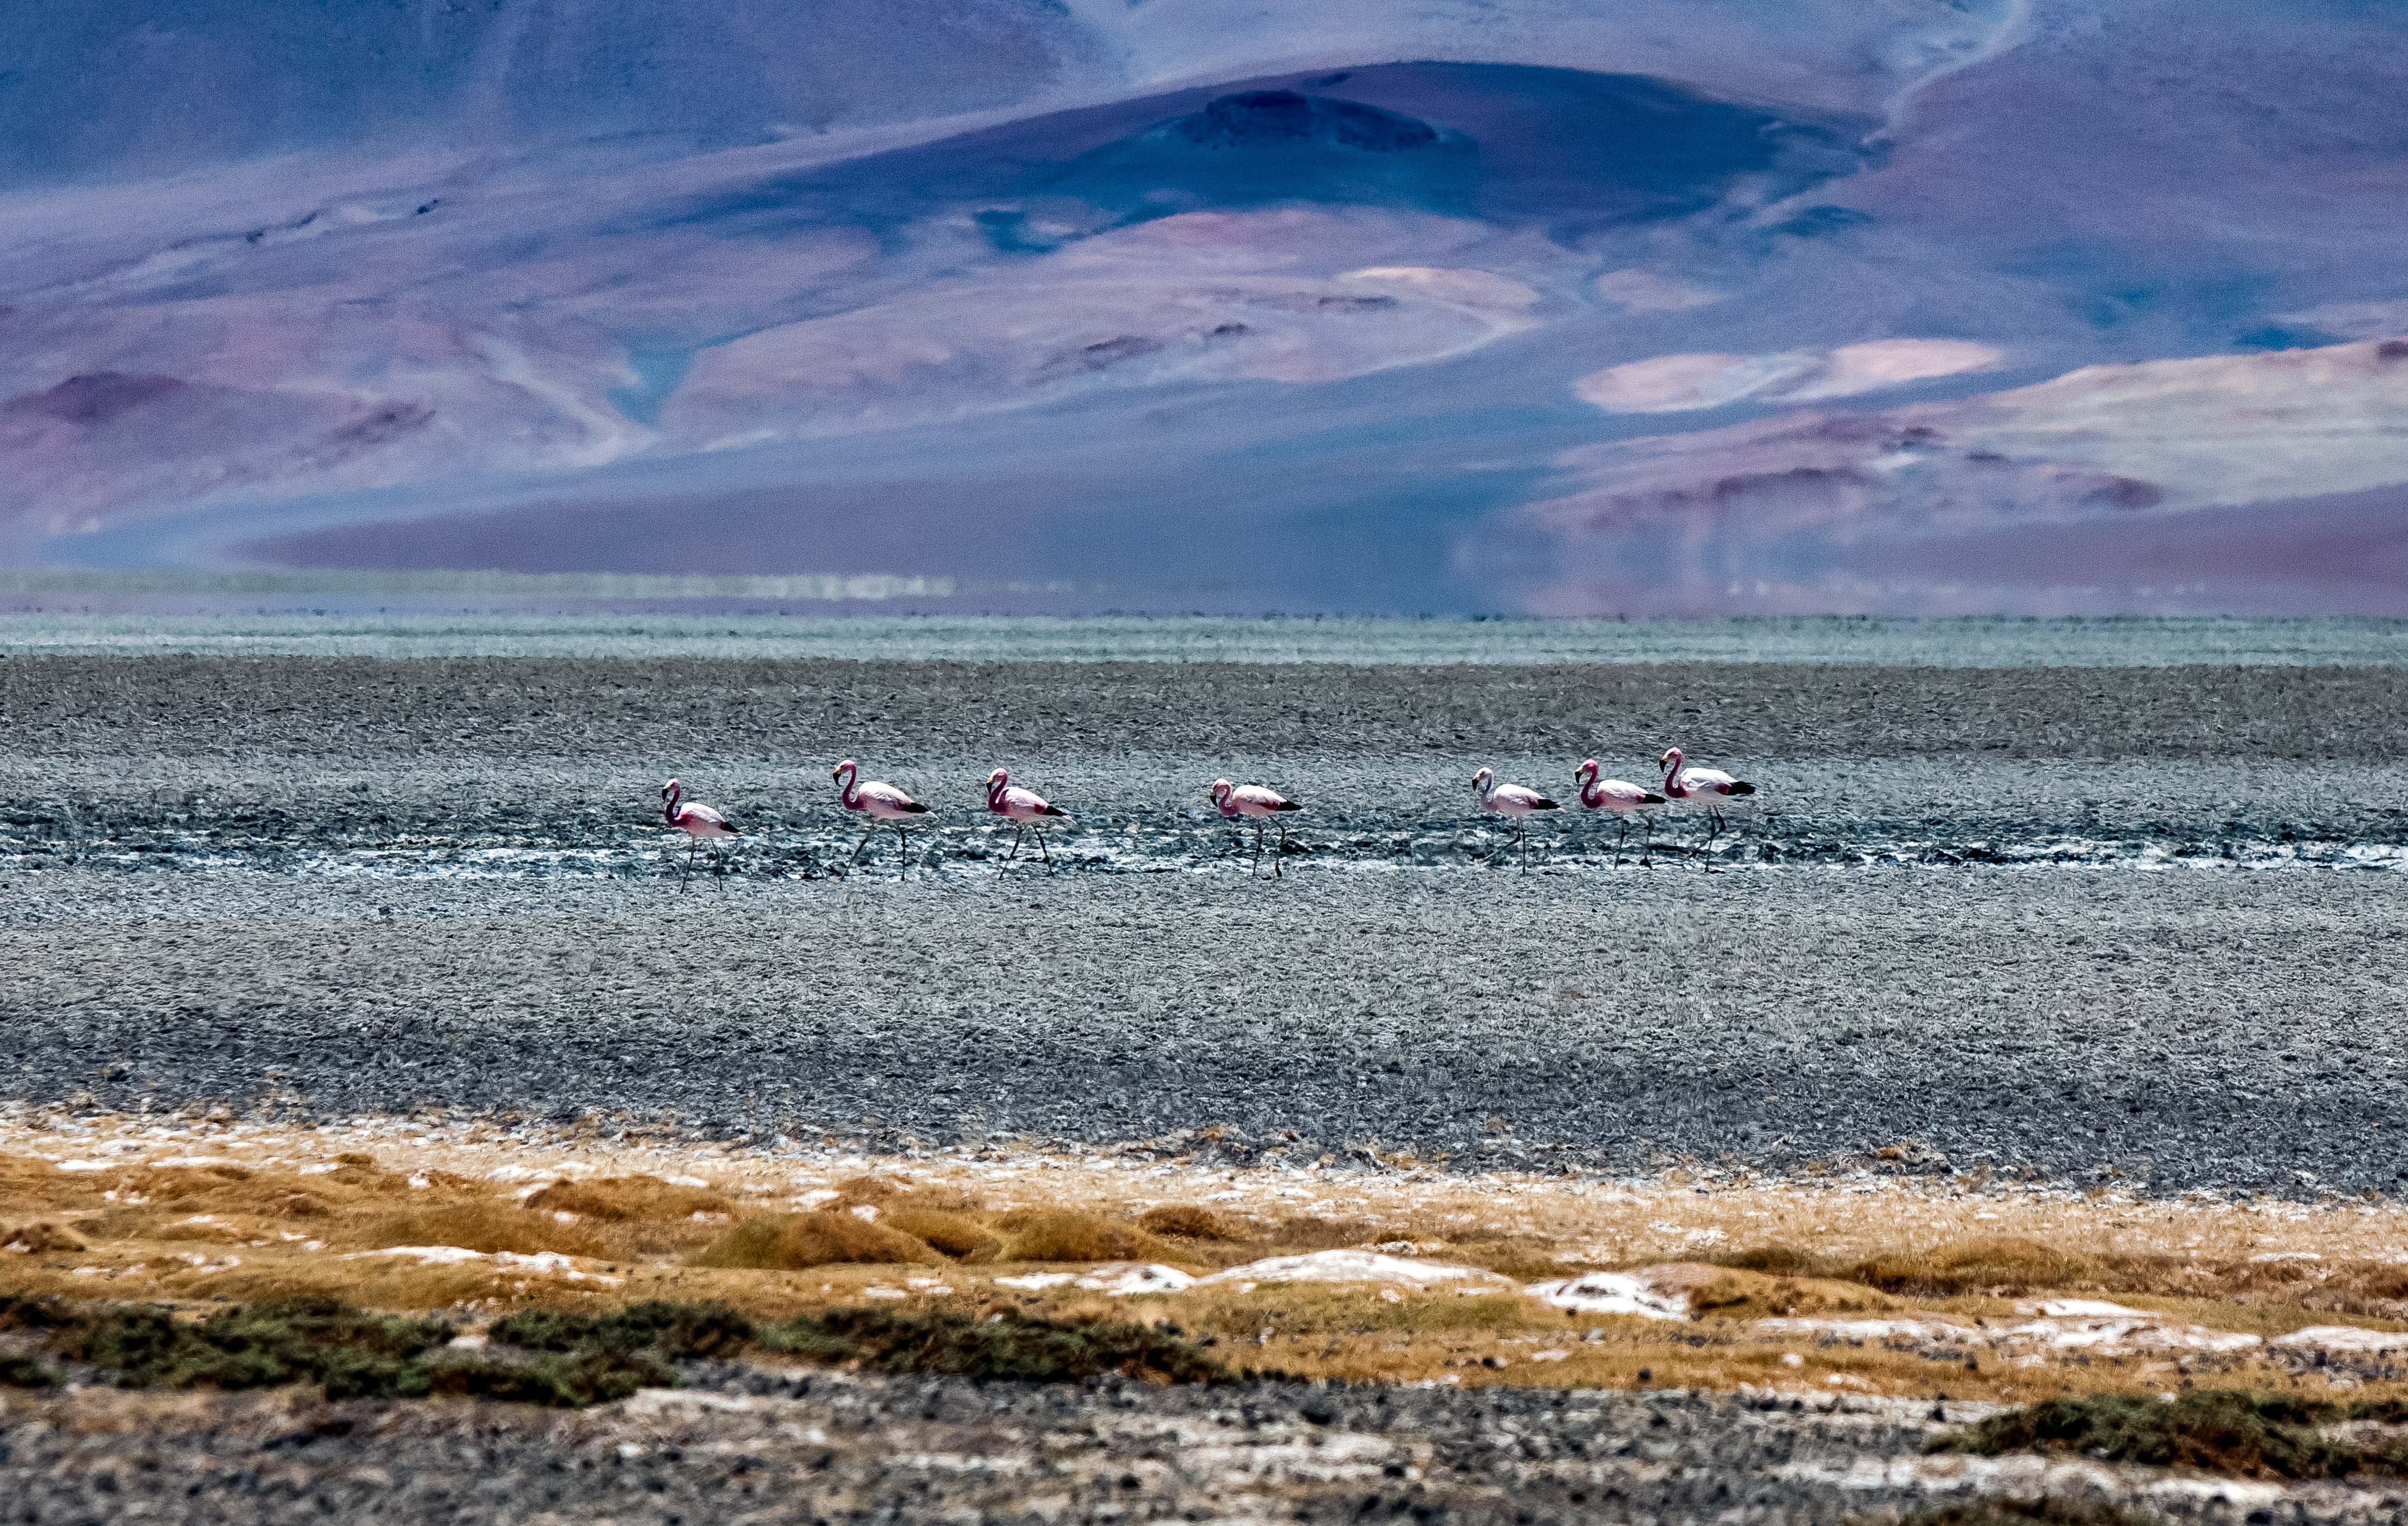 Chile, Antofagasta Prov, Flamingos Landscape, 2010, IMG 4140